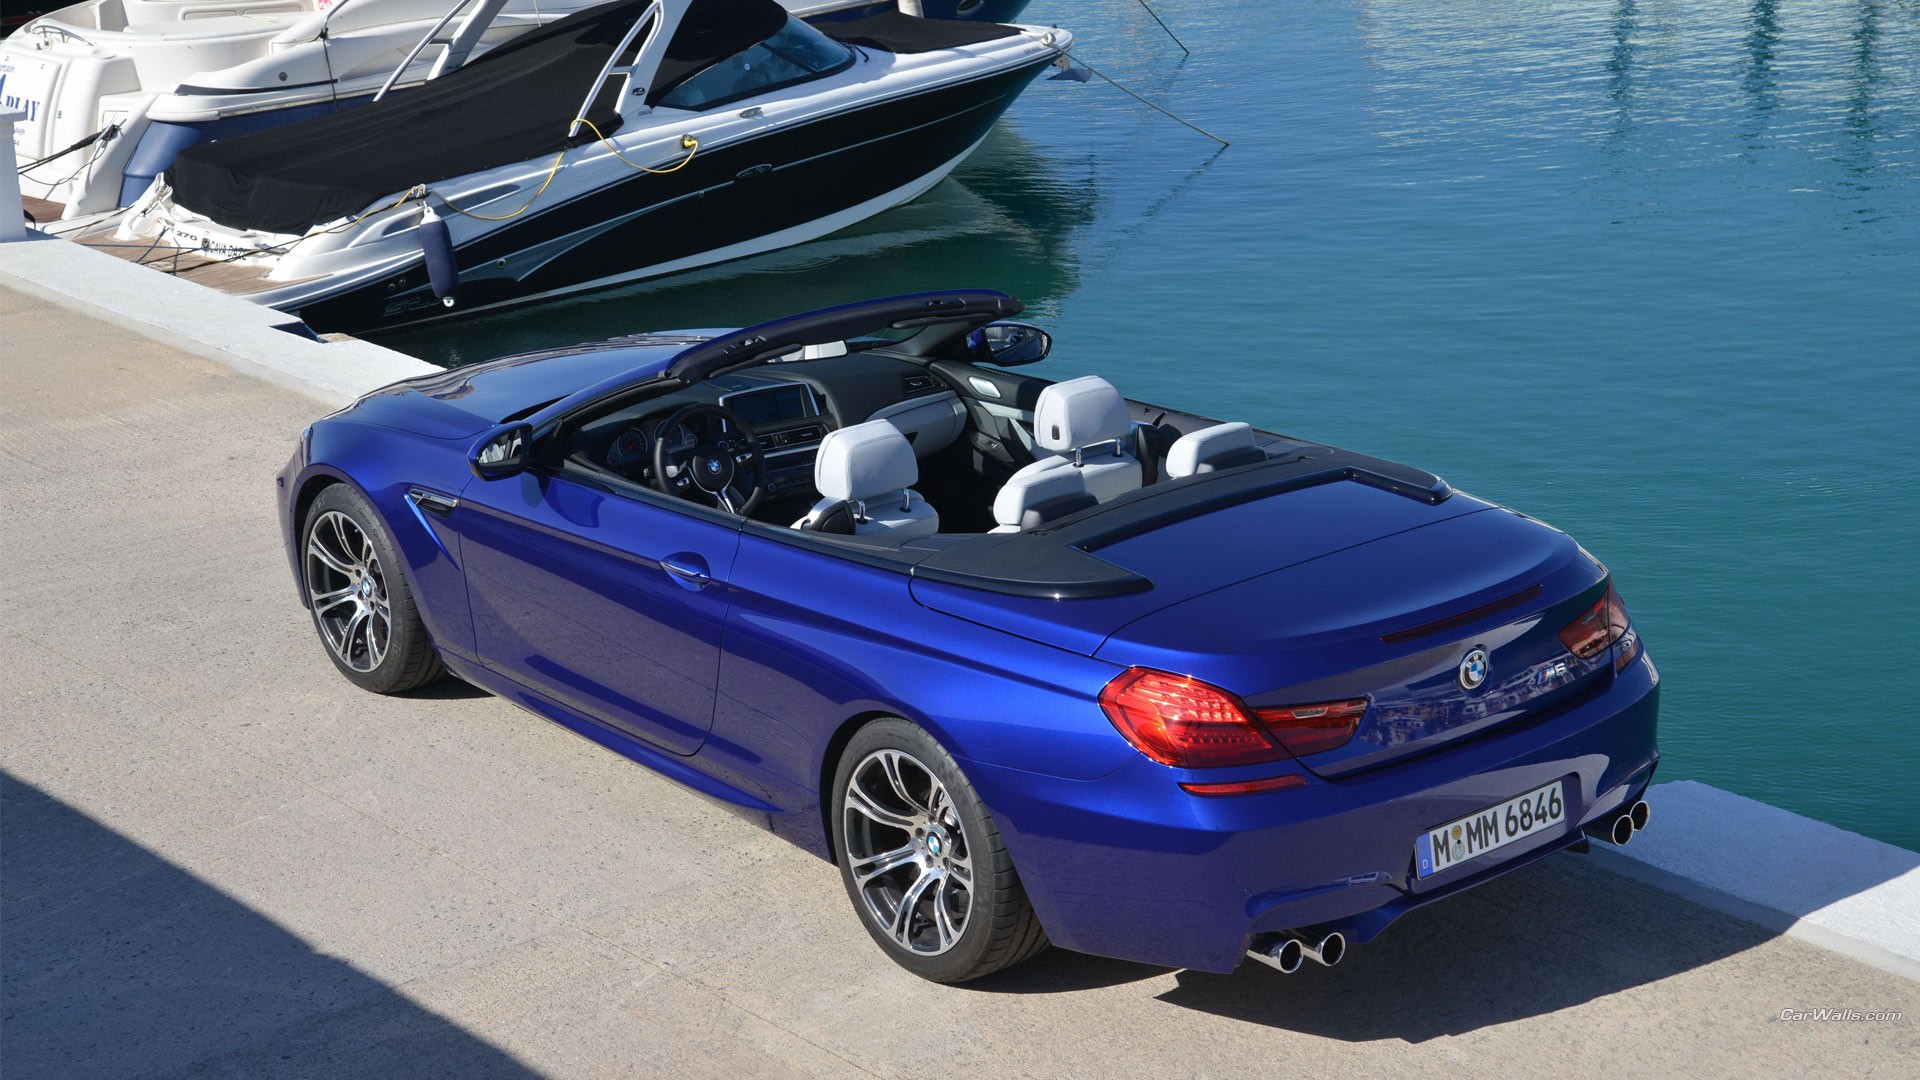 General 1920x1080 BMW M6 convertible blue cars high angle BMW 6 Series BMW F12/F13/F06 BMW car vehicle boat